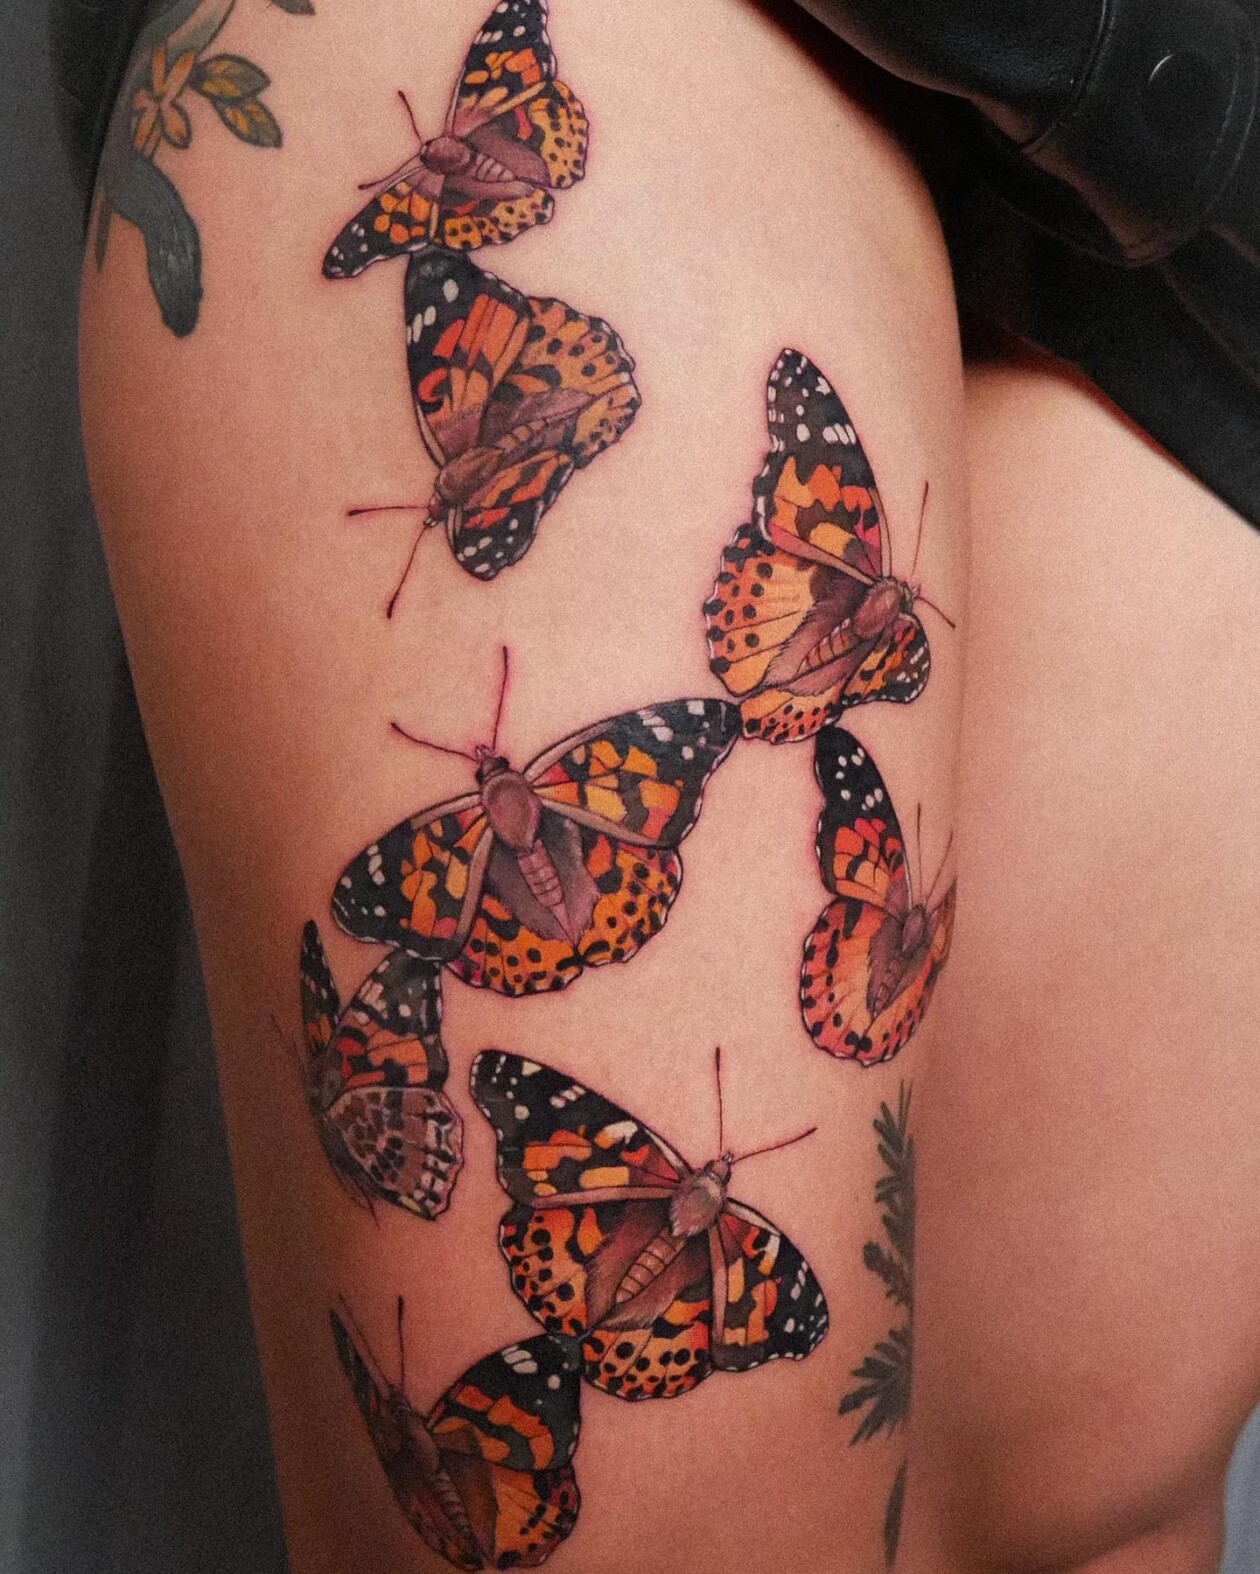 Botany And Animal Illustrative Tattoos By Vanessa Core (3)